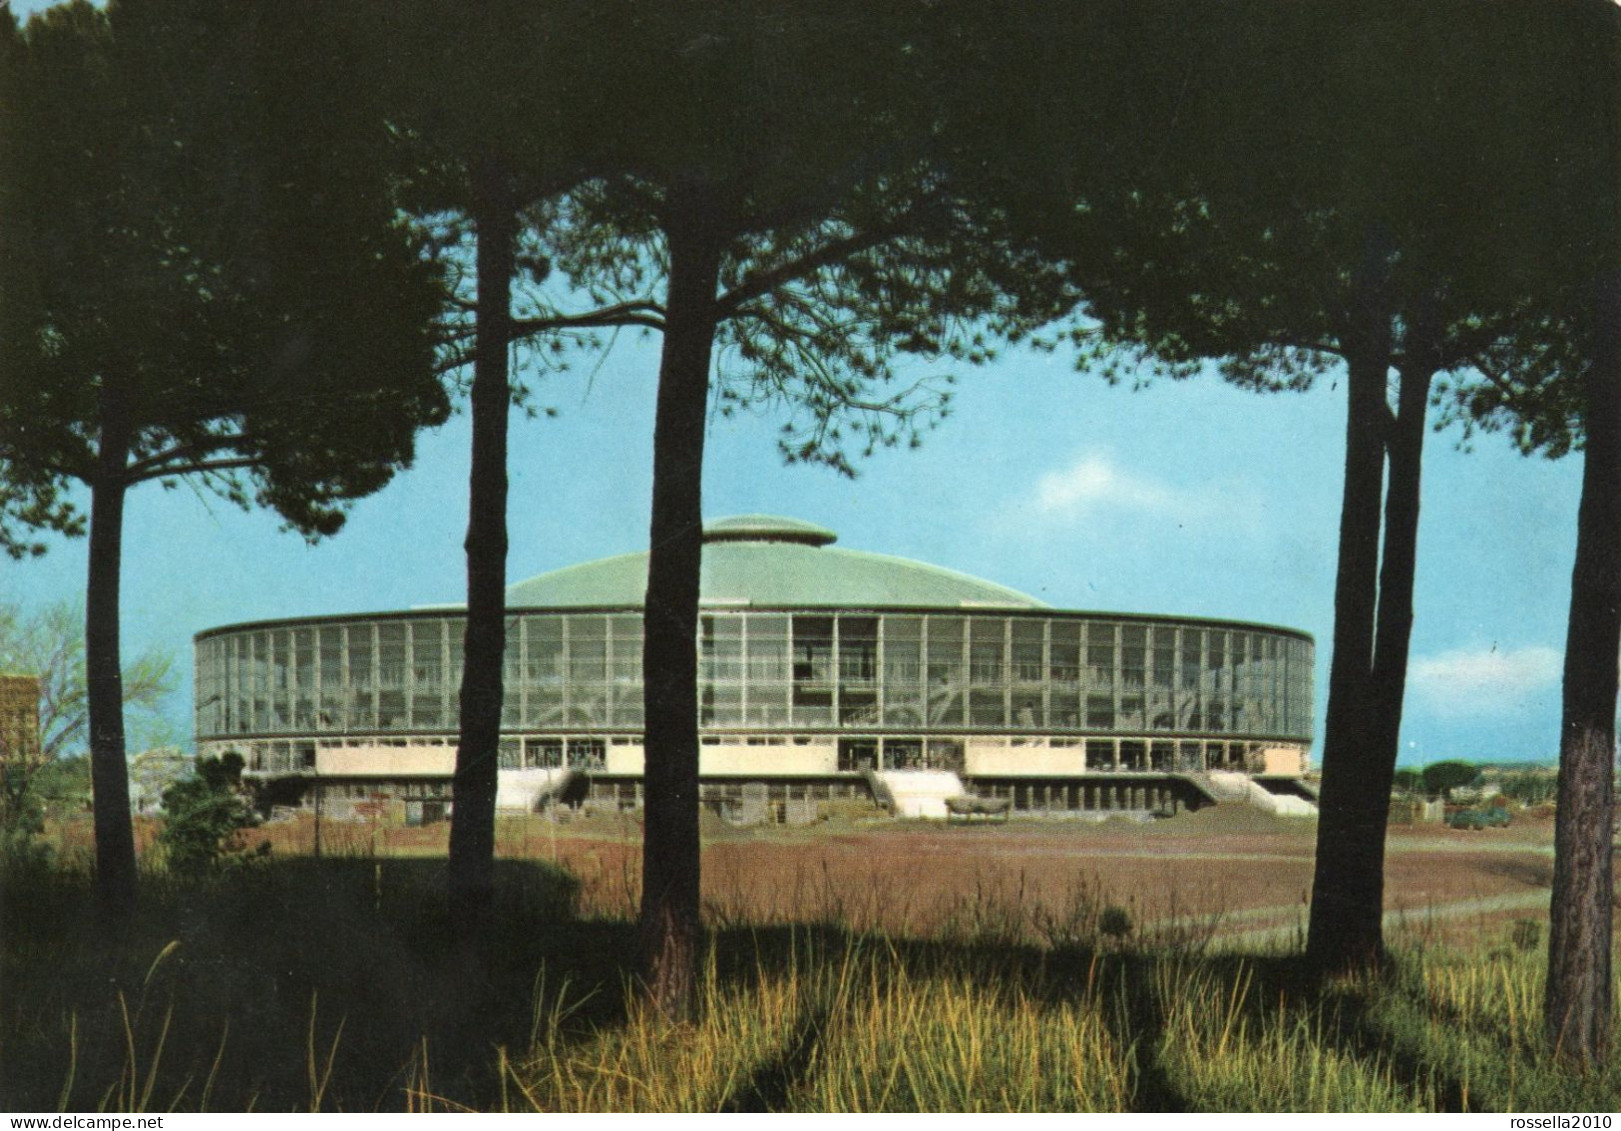 CARTOLINA  ITALIA 1966 ROMA EUR PALAZZO DELLO SPORT Italy Postcard ITALIEN Ansichtskarten - Stades & Structures Sportives